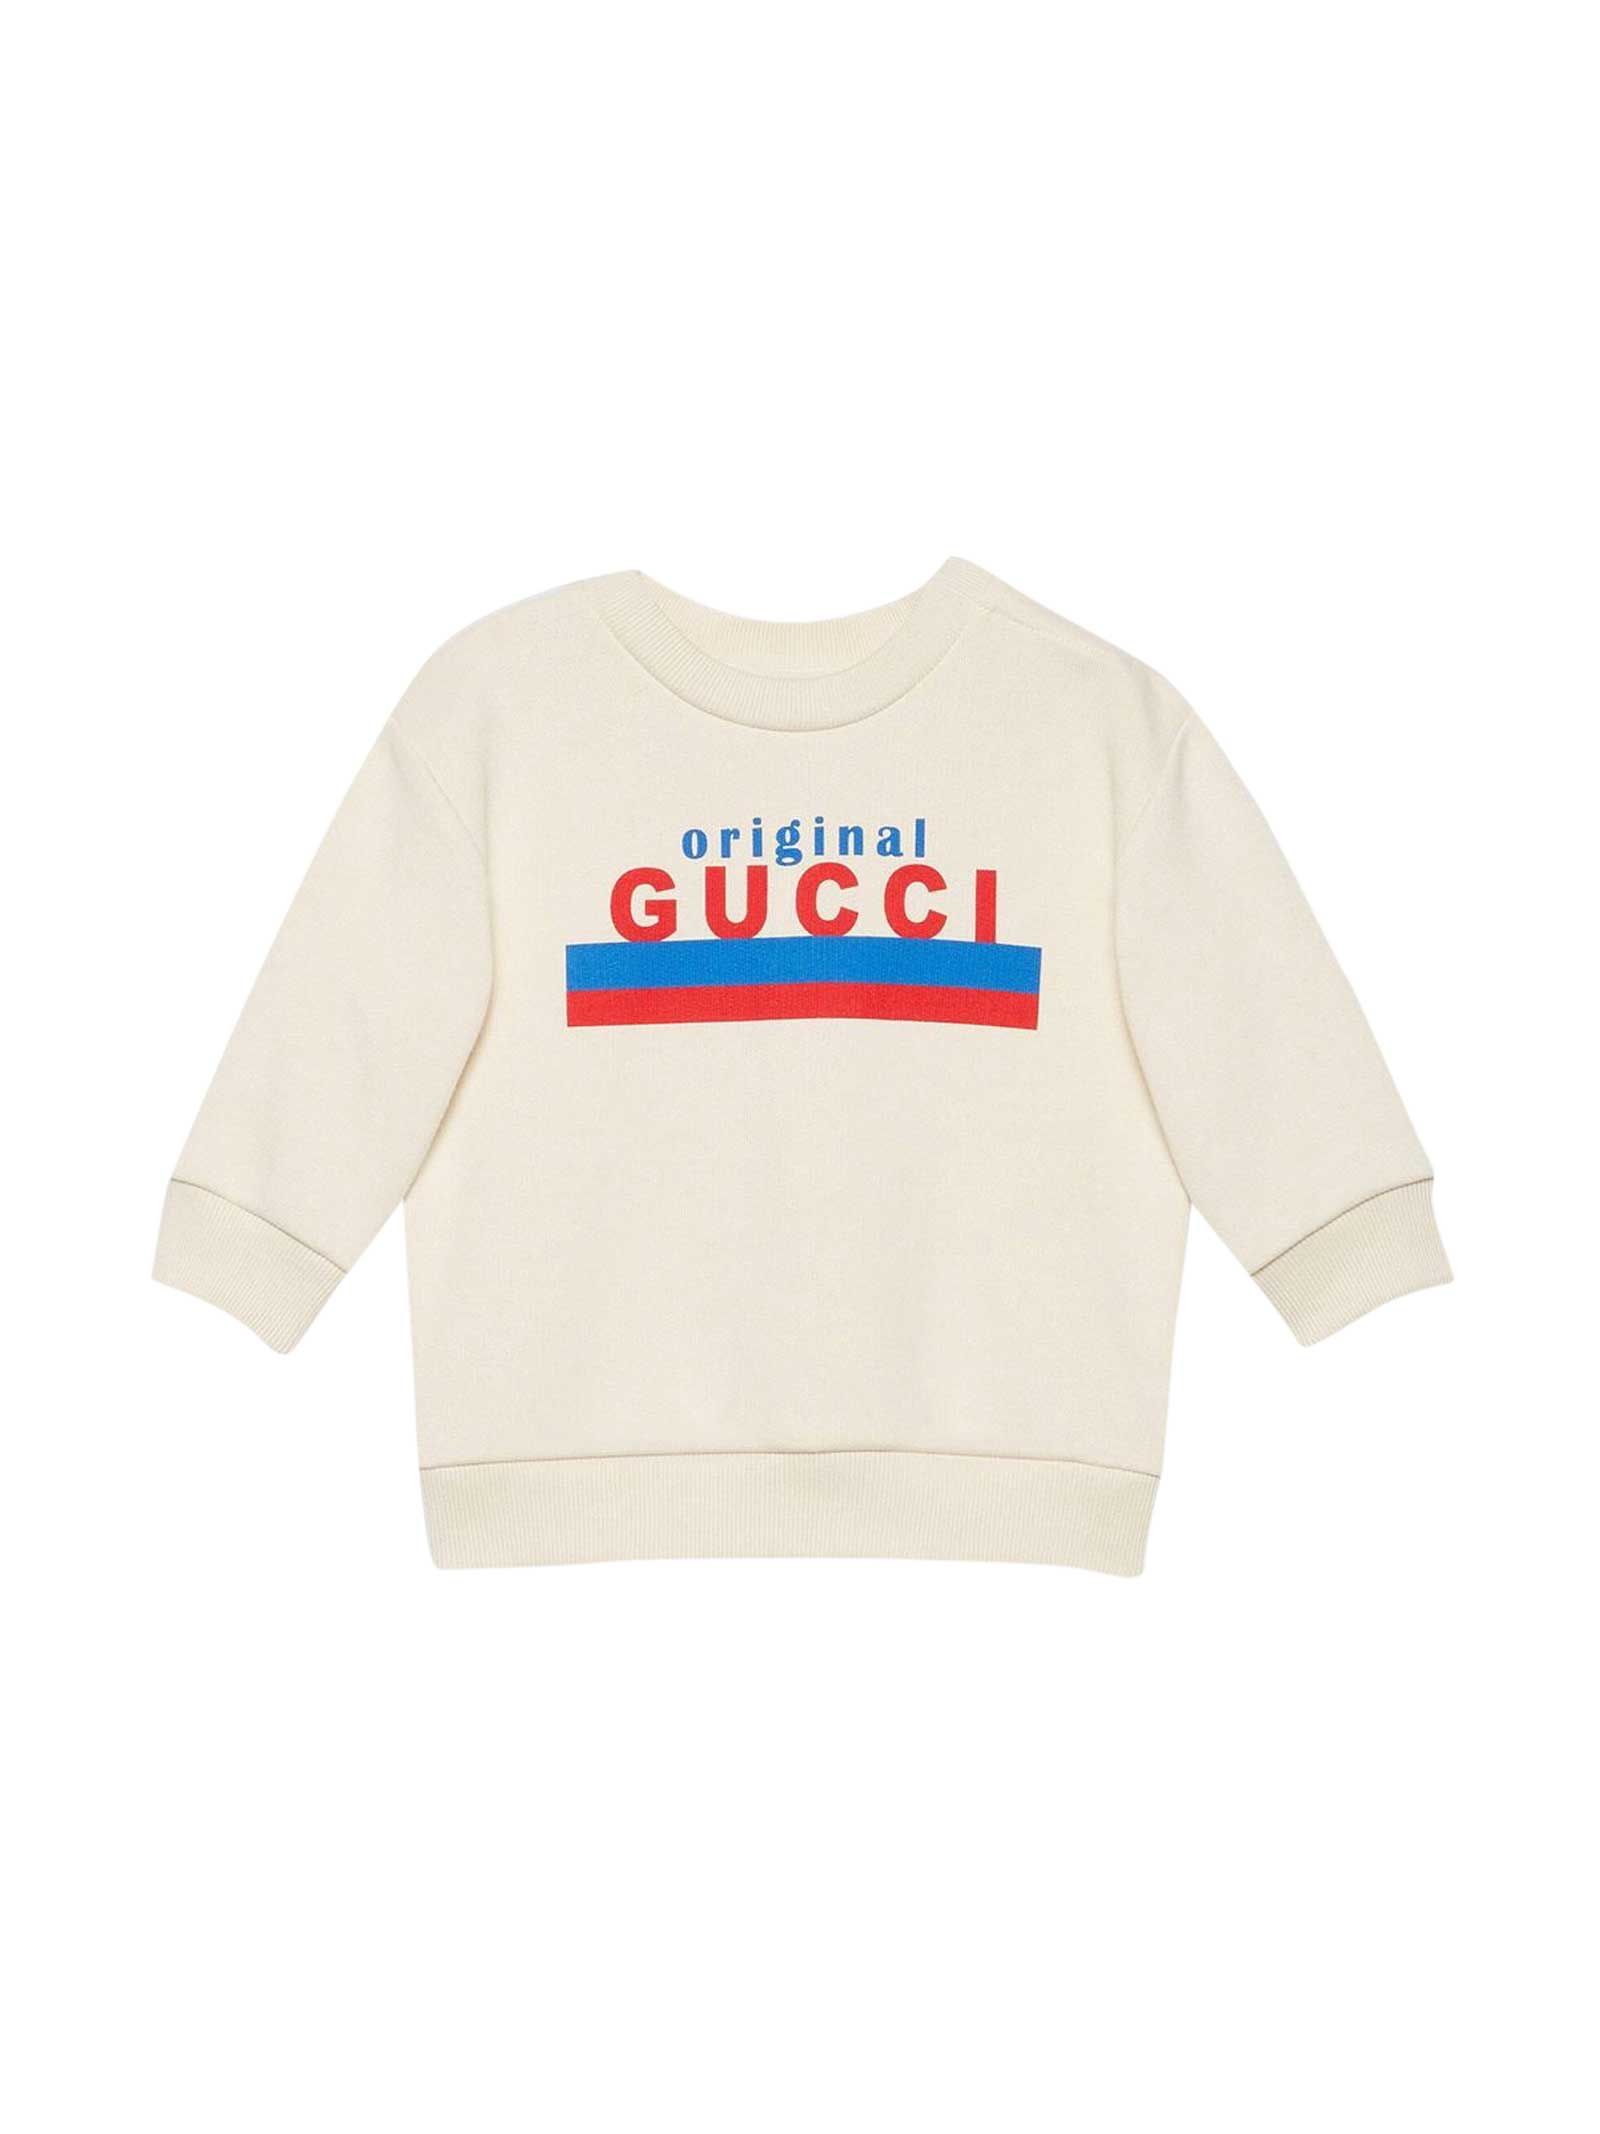 Gucci White Sweatshirt With Print